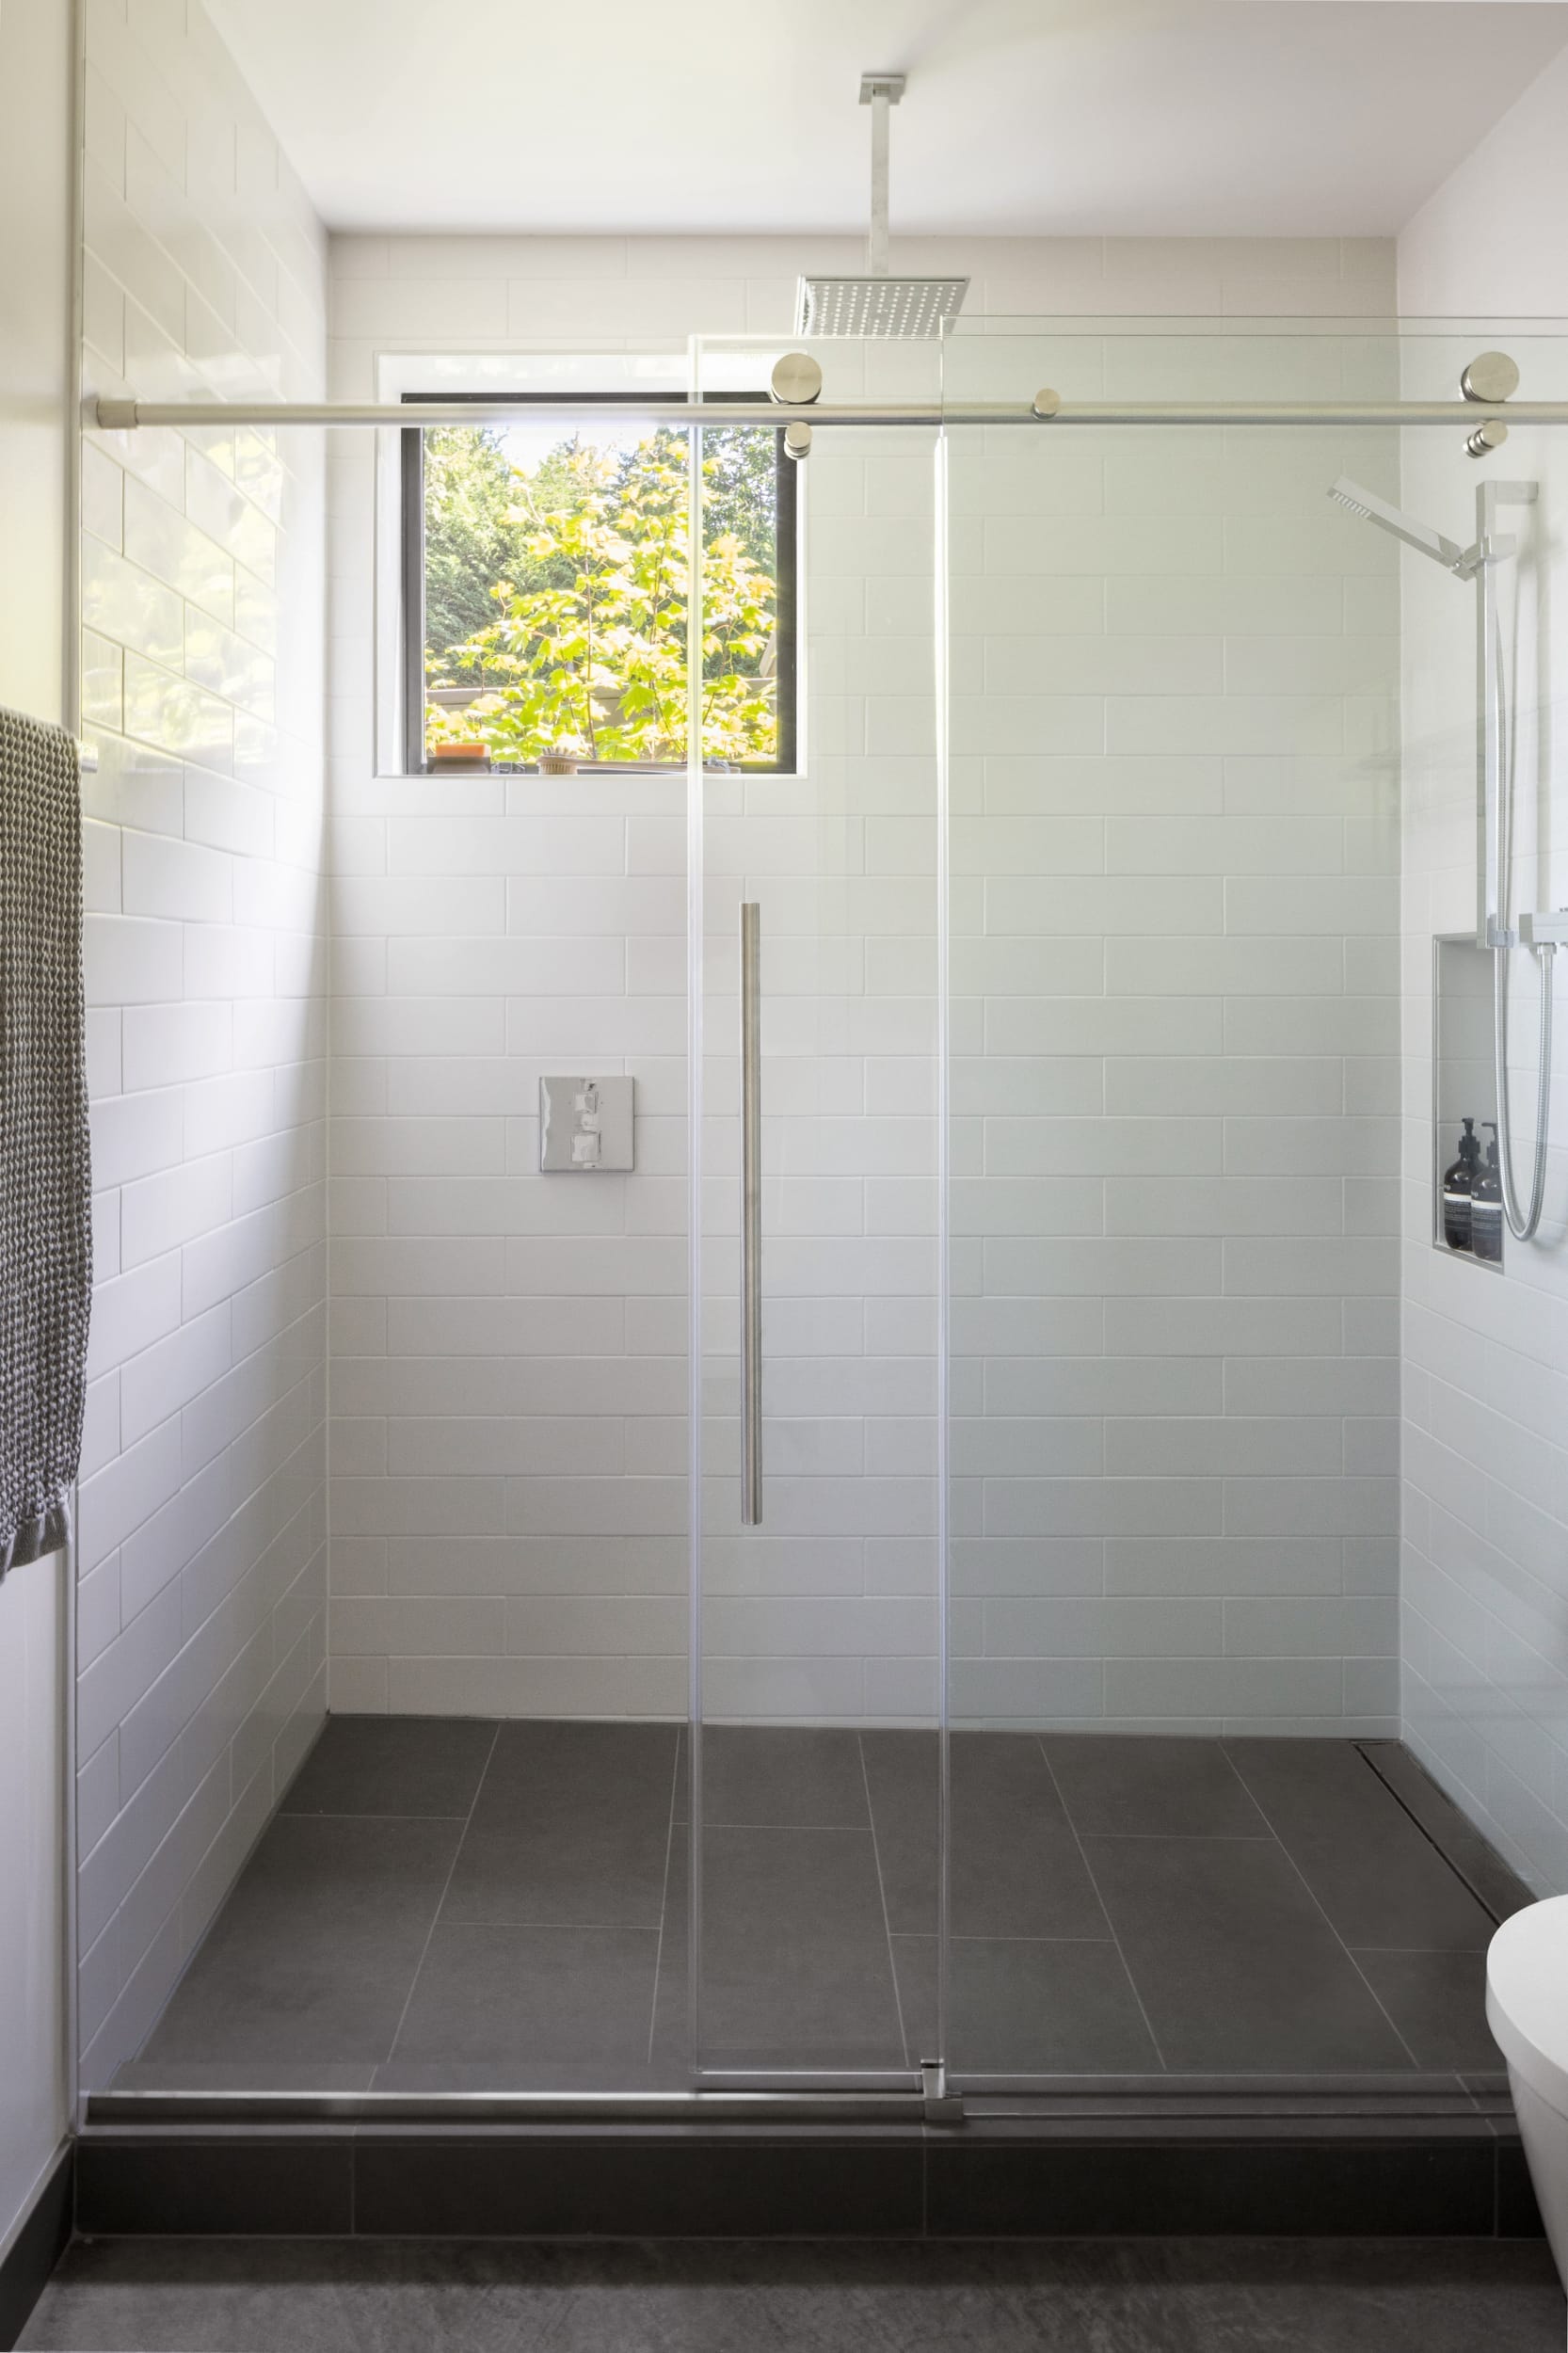 A modern home bathroom with a glass shower door.